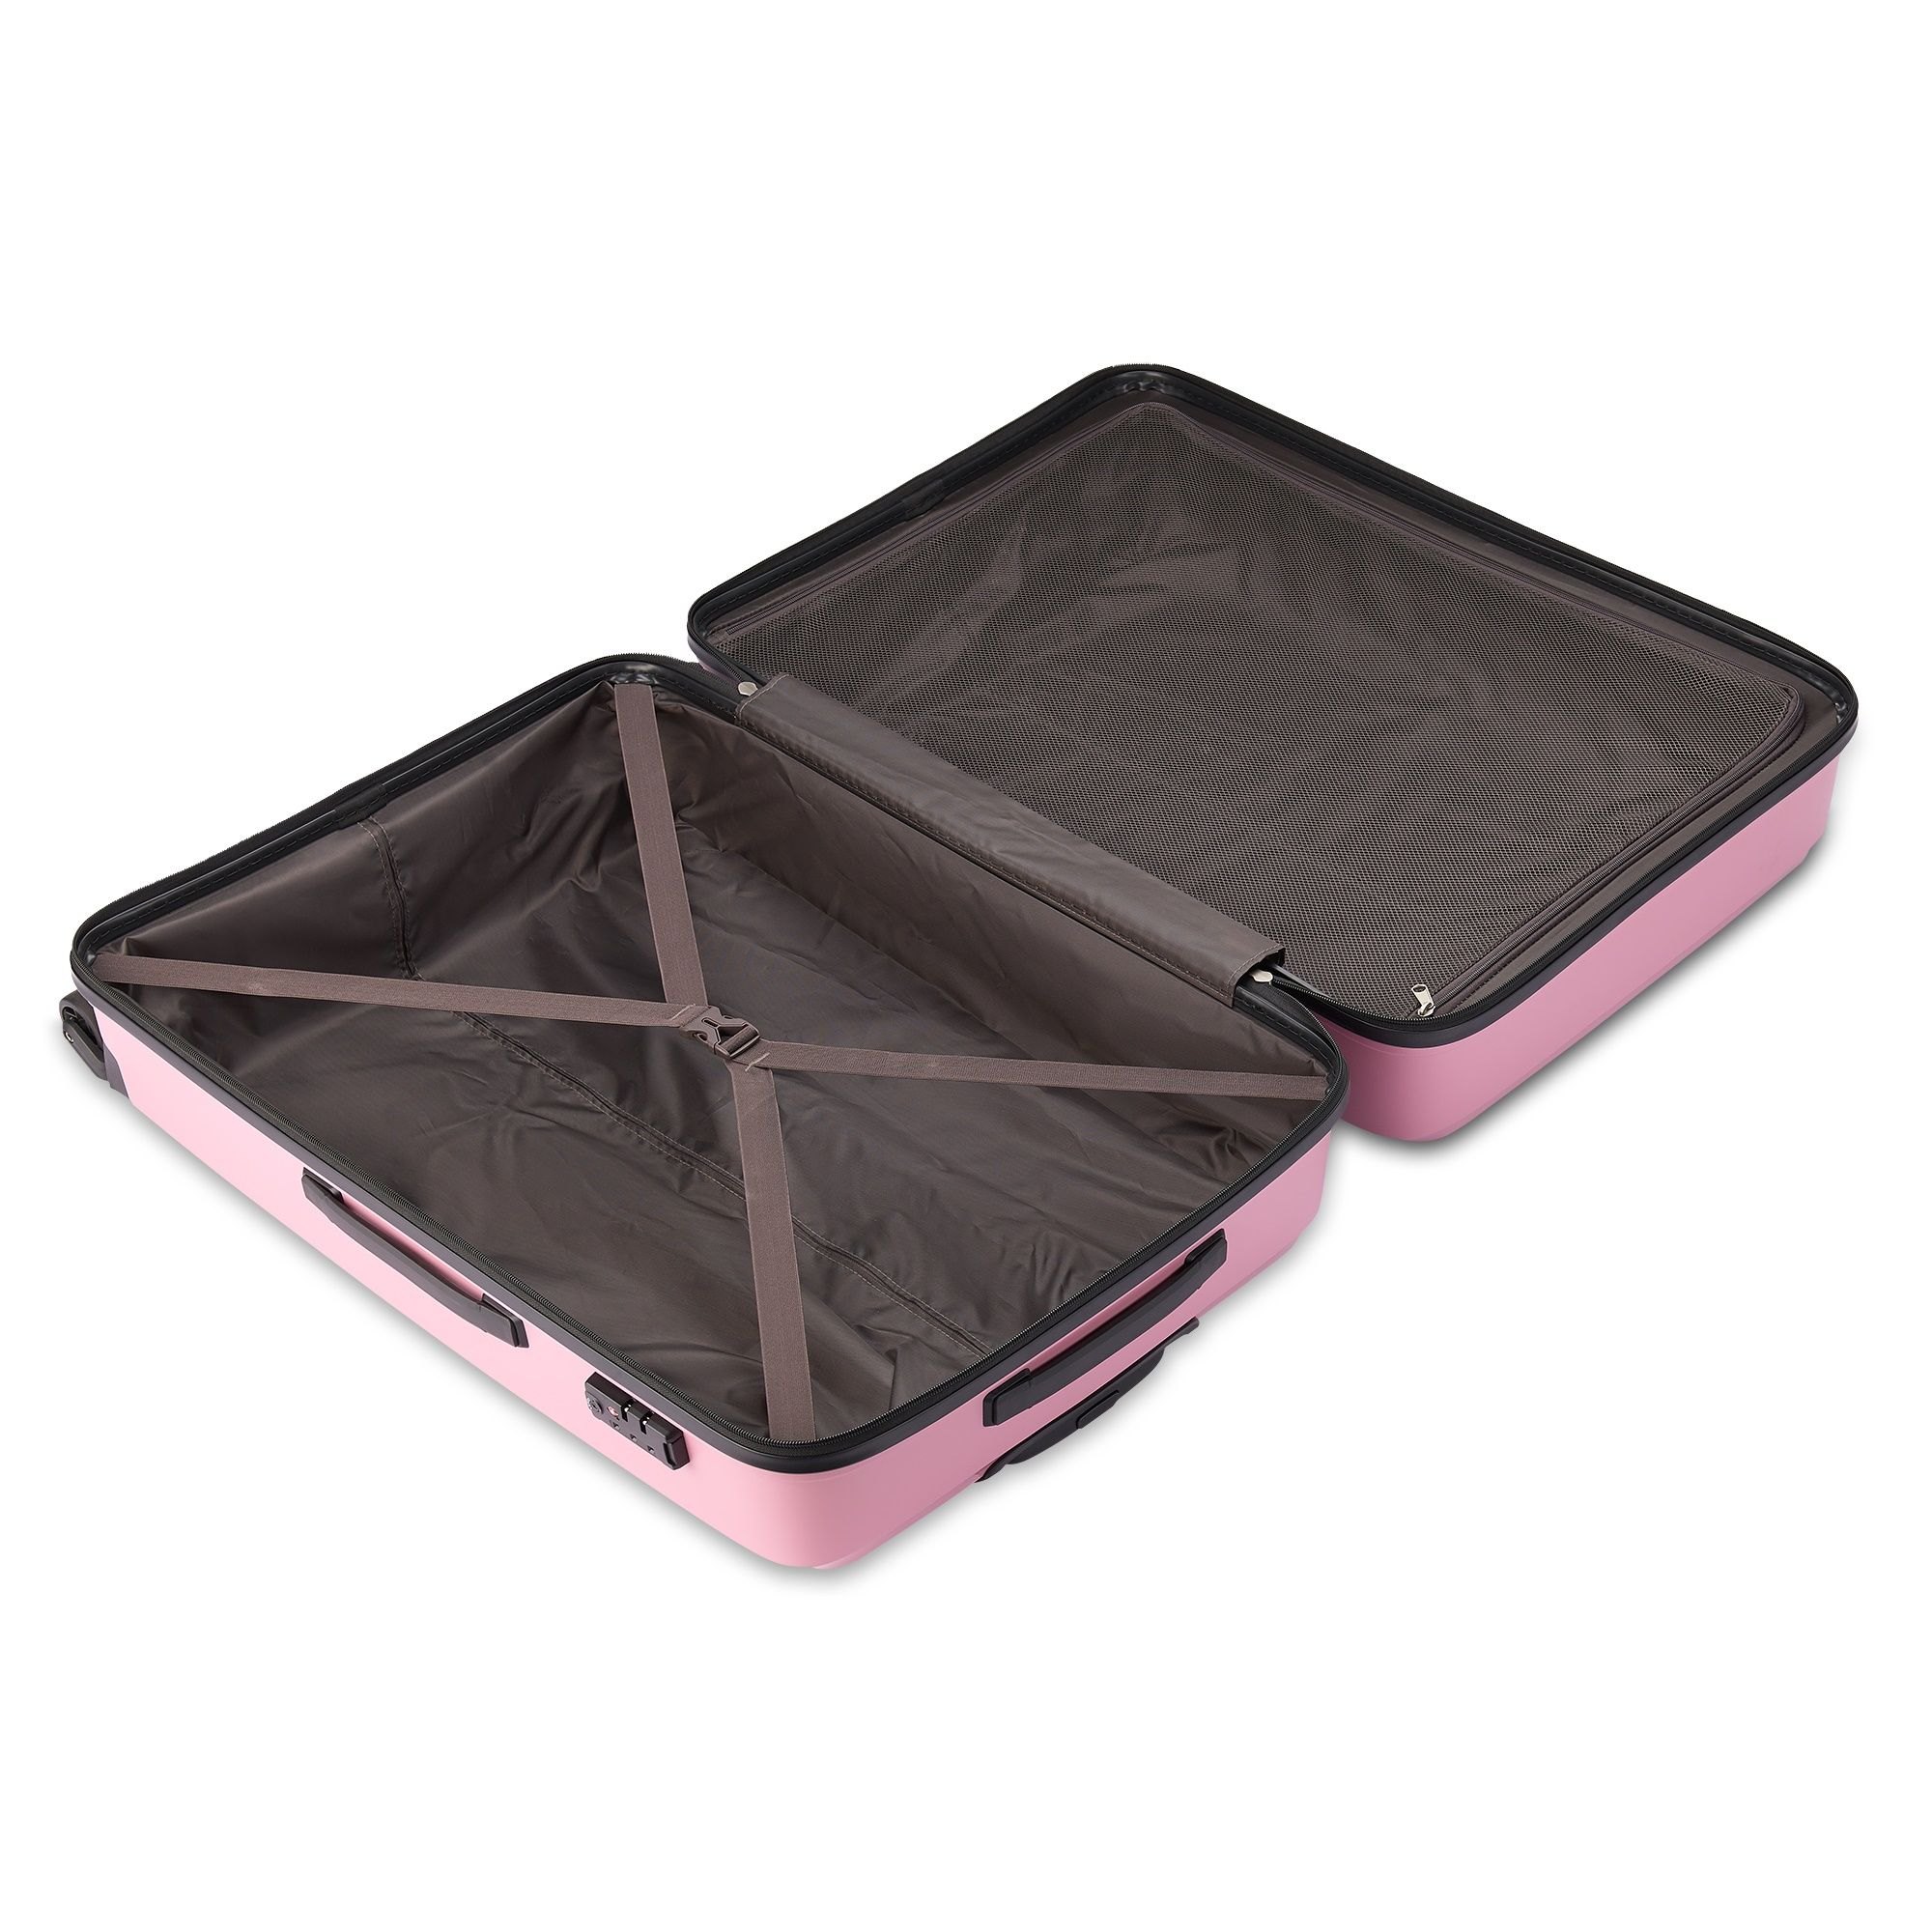 Tripp Chic Rose Large Suitcase - Tripp Ltd